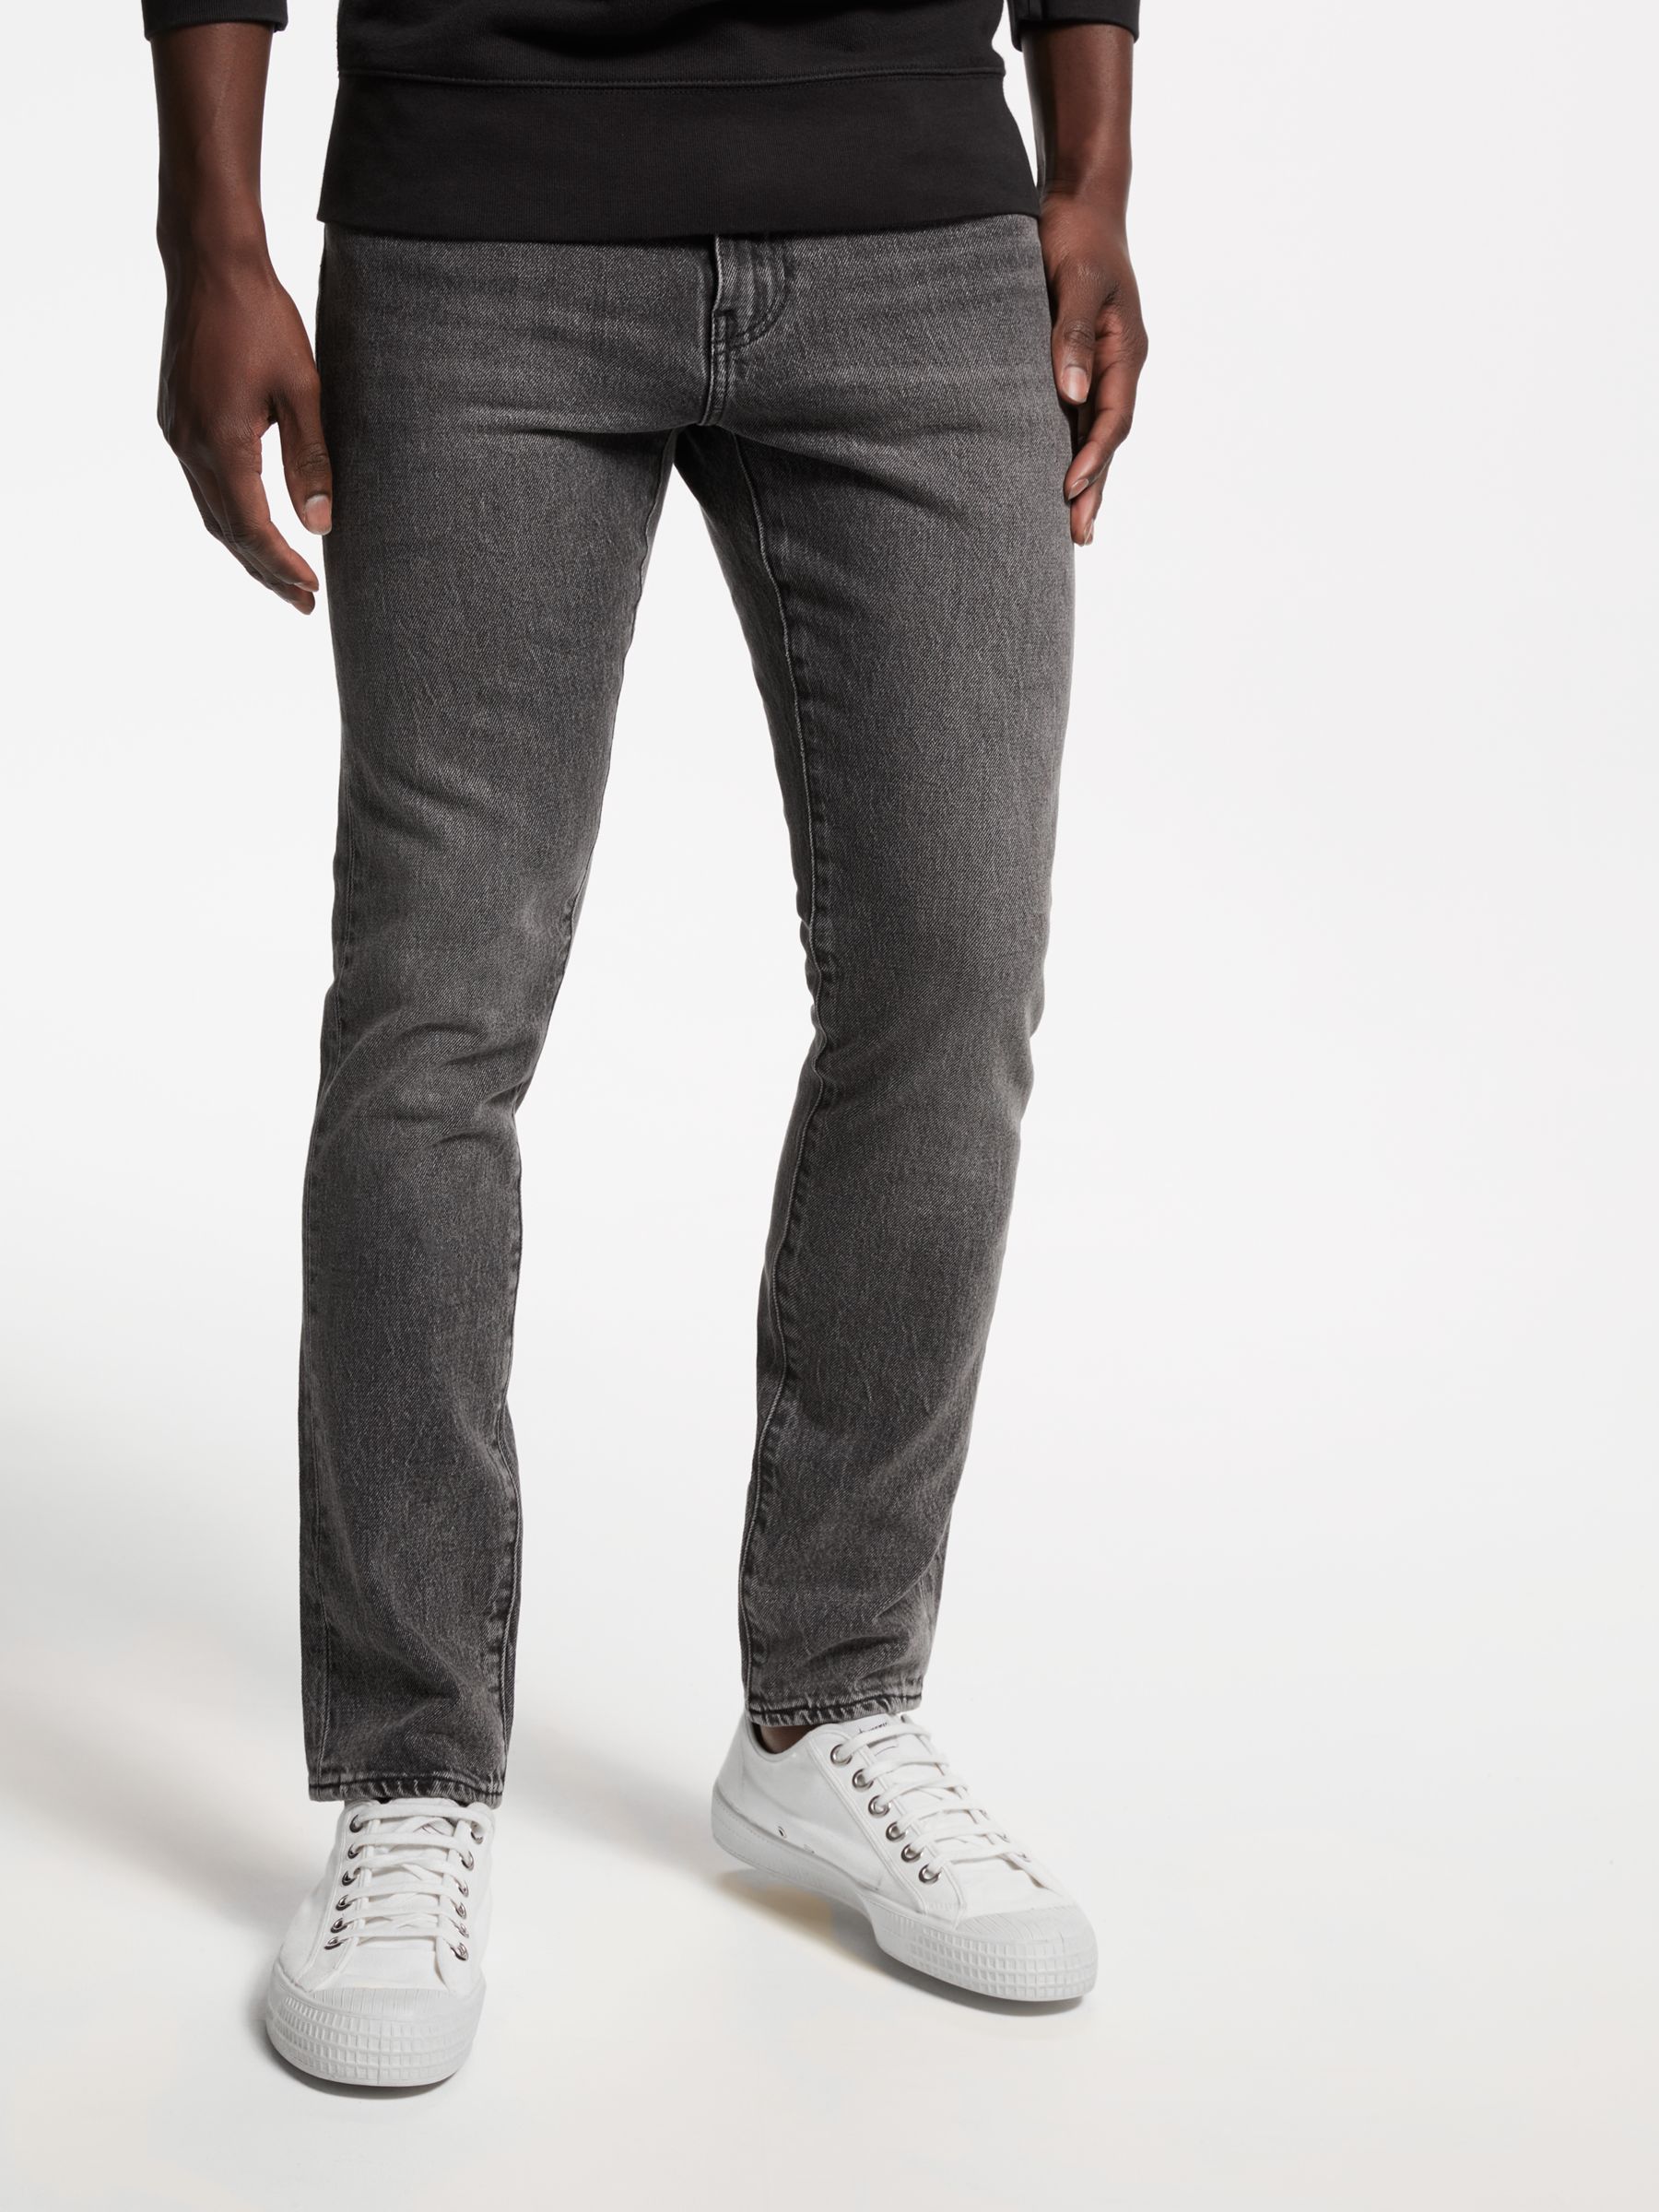 levi's grey skinny jeans